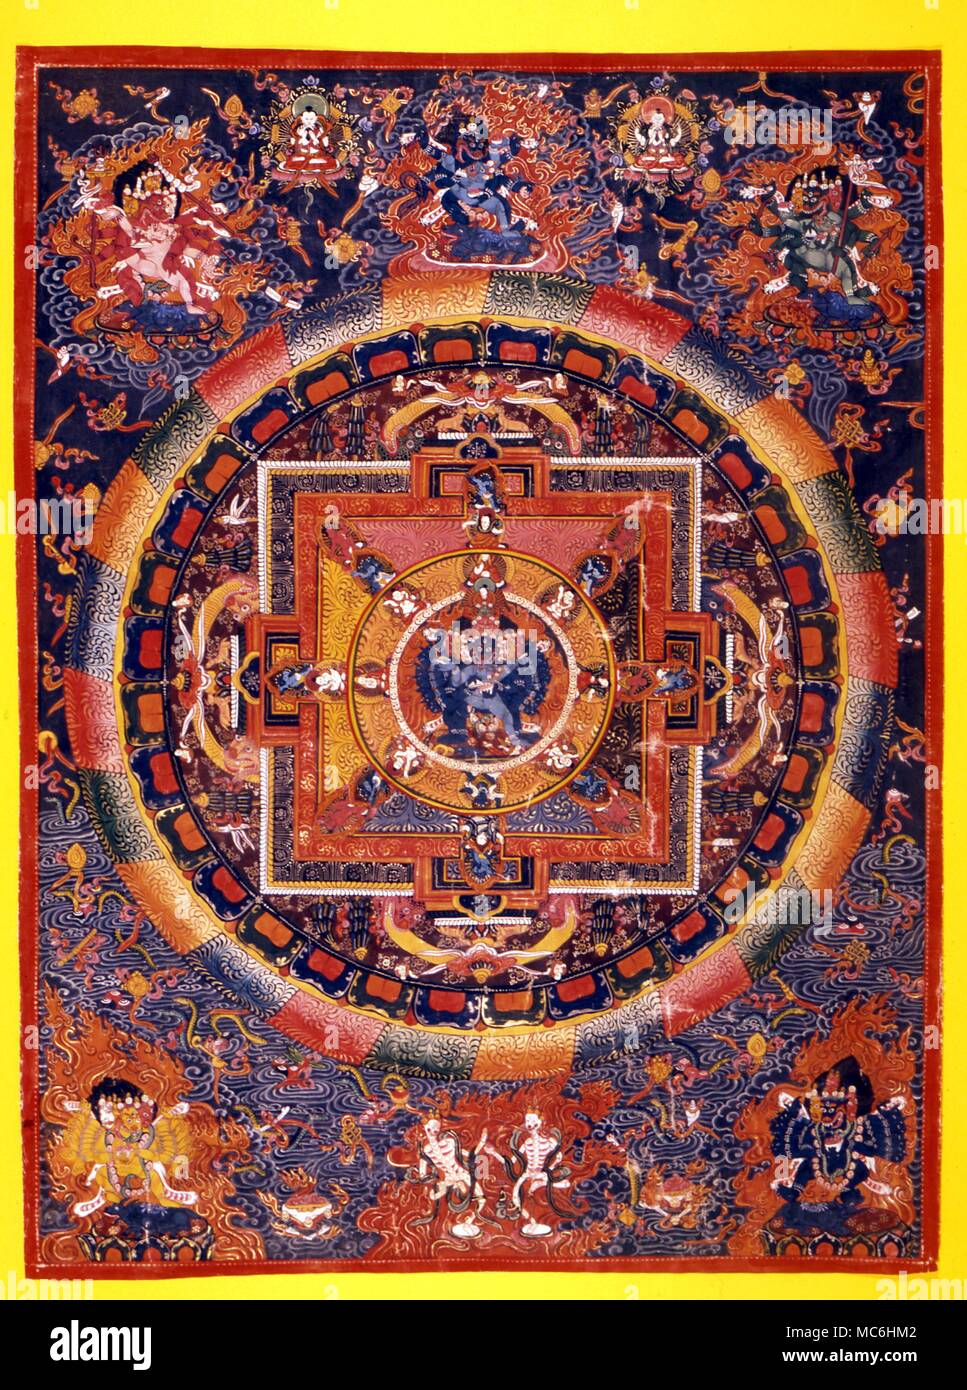 Hindu Mandala based on the plan of Meru with various deities and demonic beings. Stock Photo